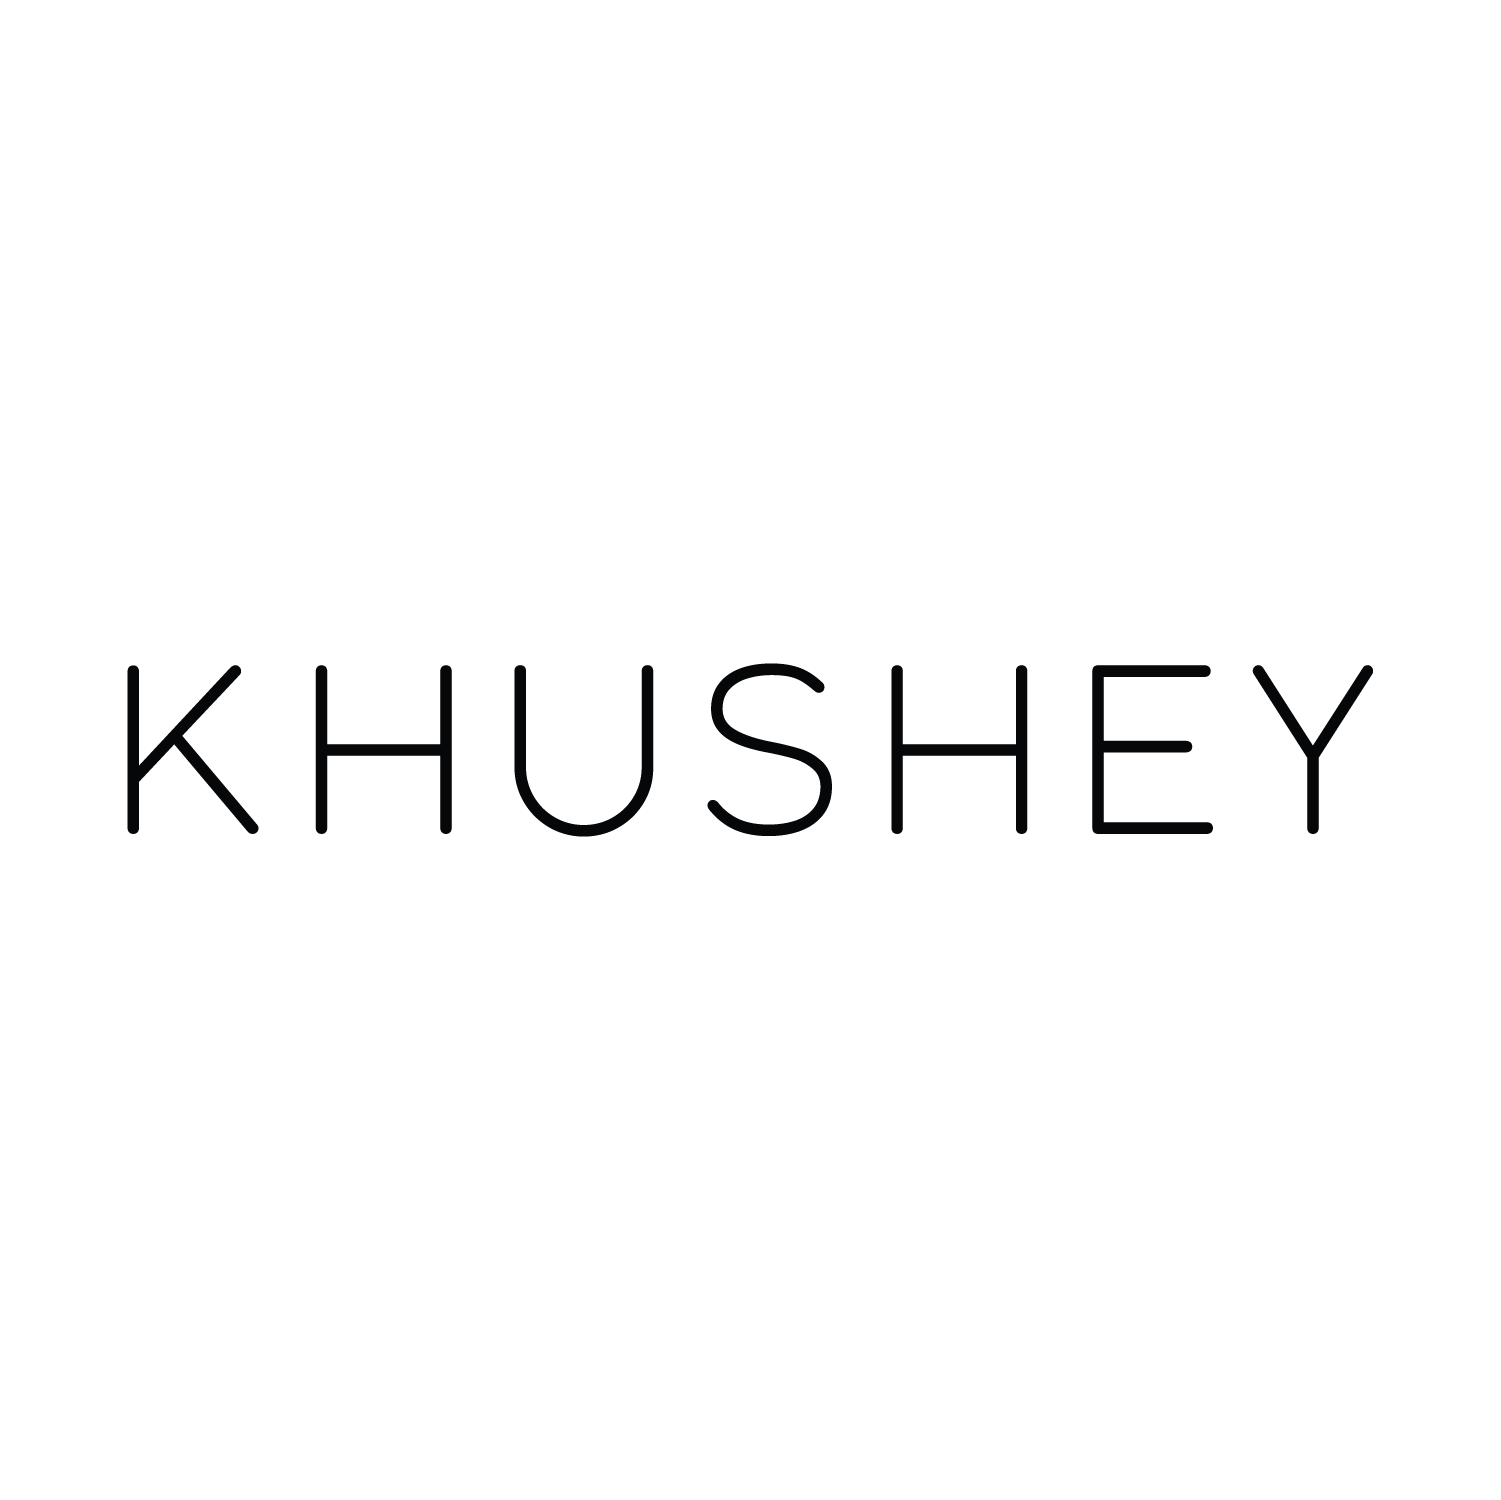 Load video: Why Khushey?